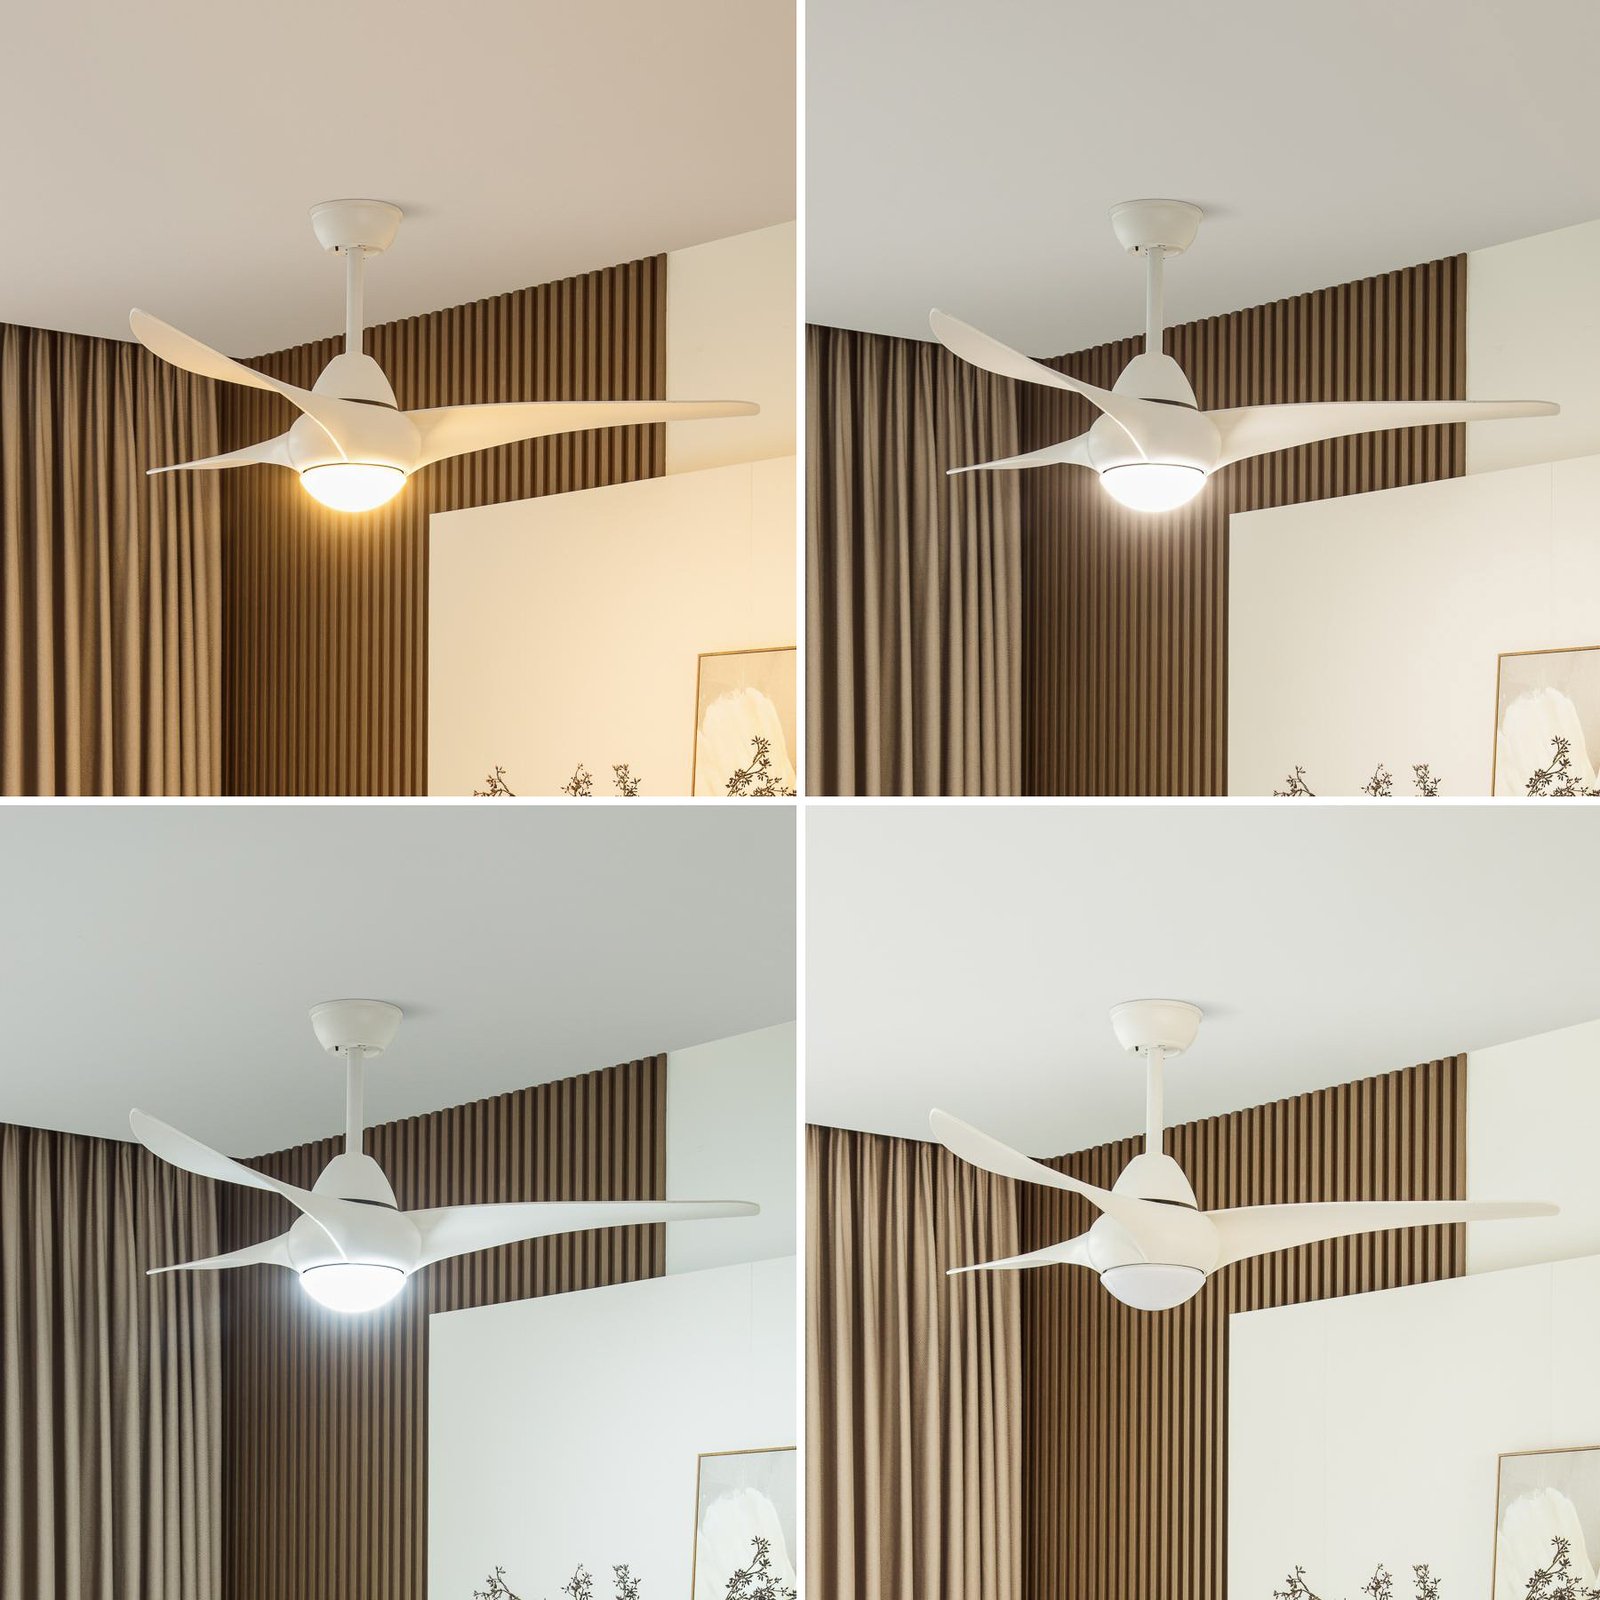 Starluna LED ceiling fan Zoika, white, quiet, Ø 115 cm